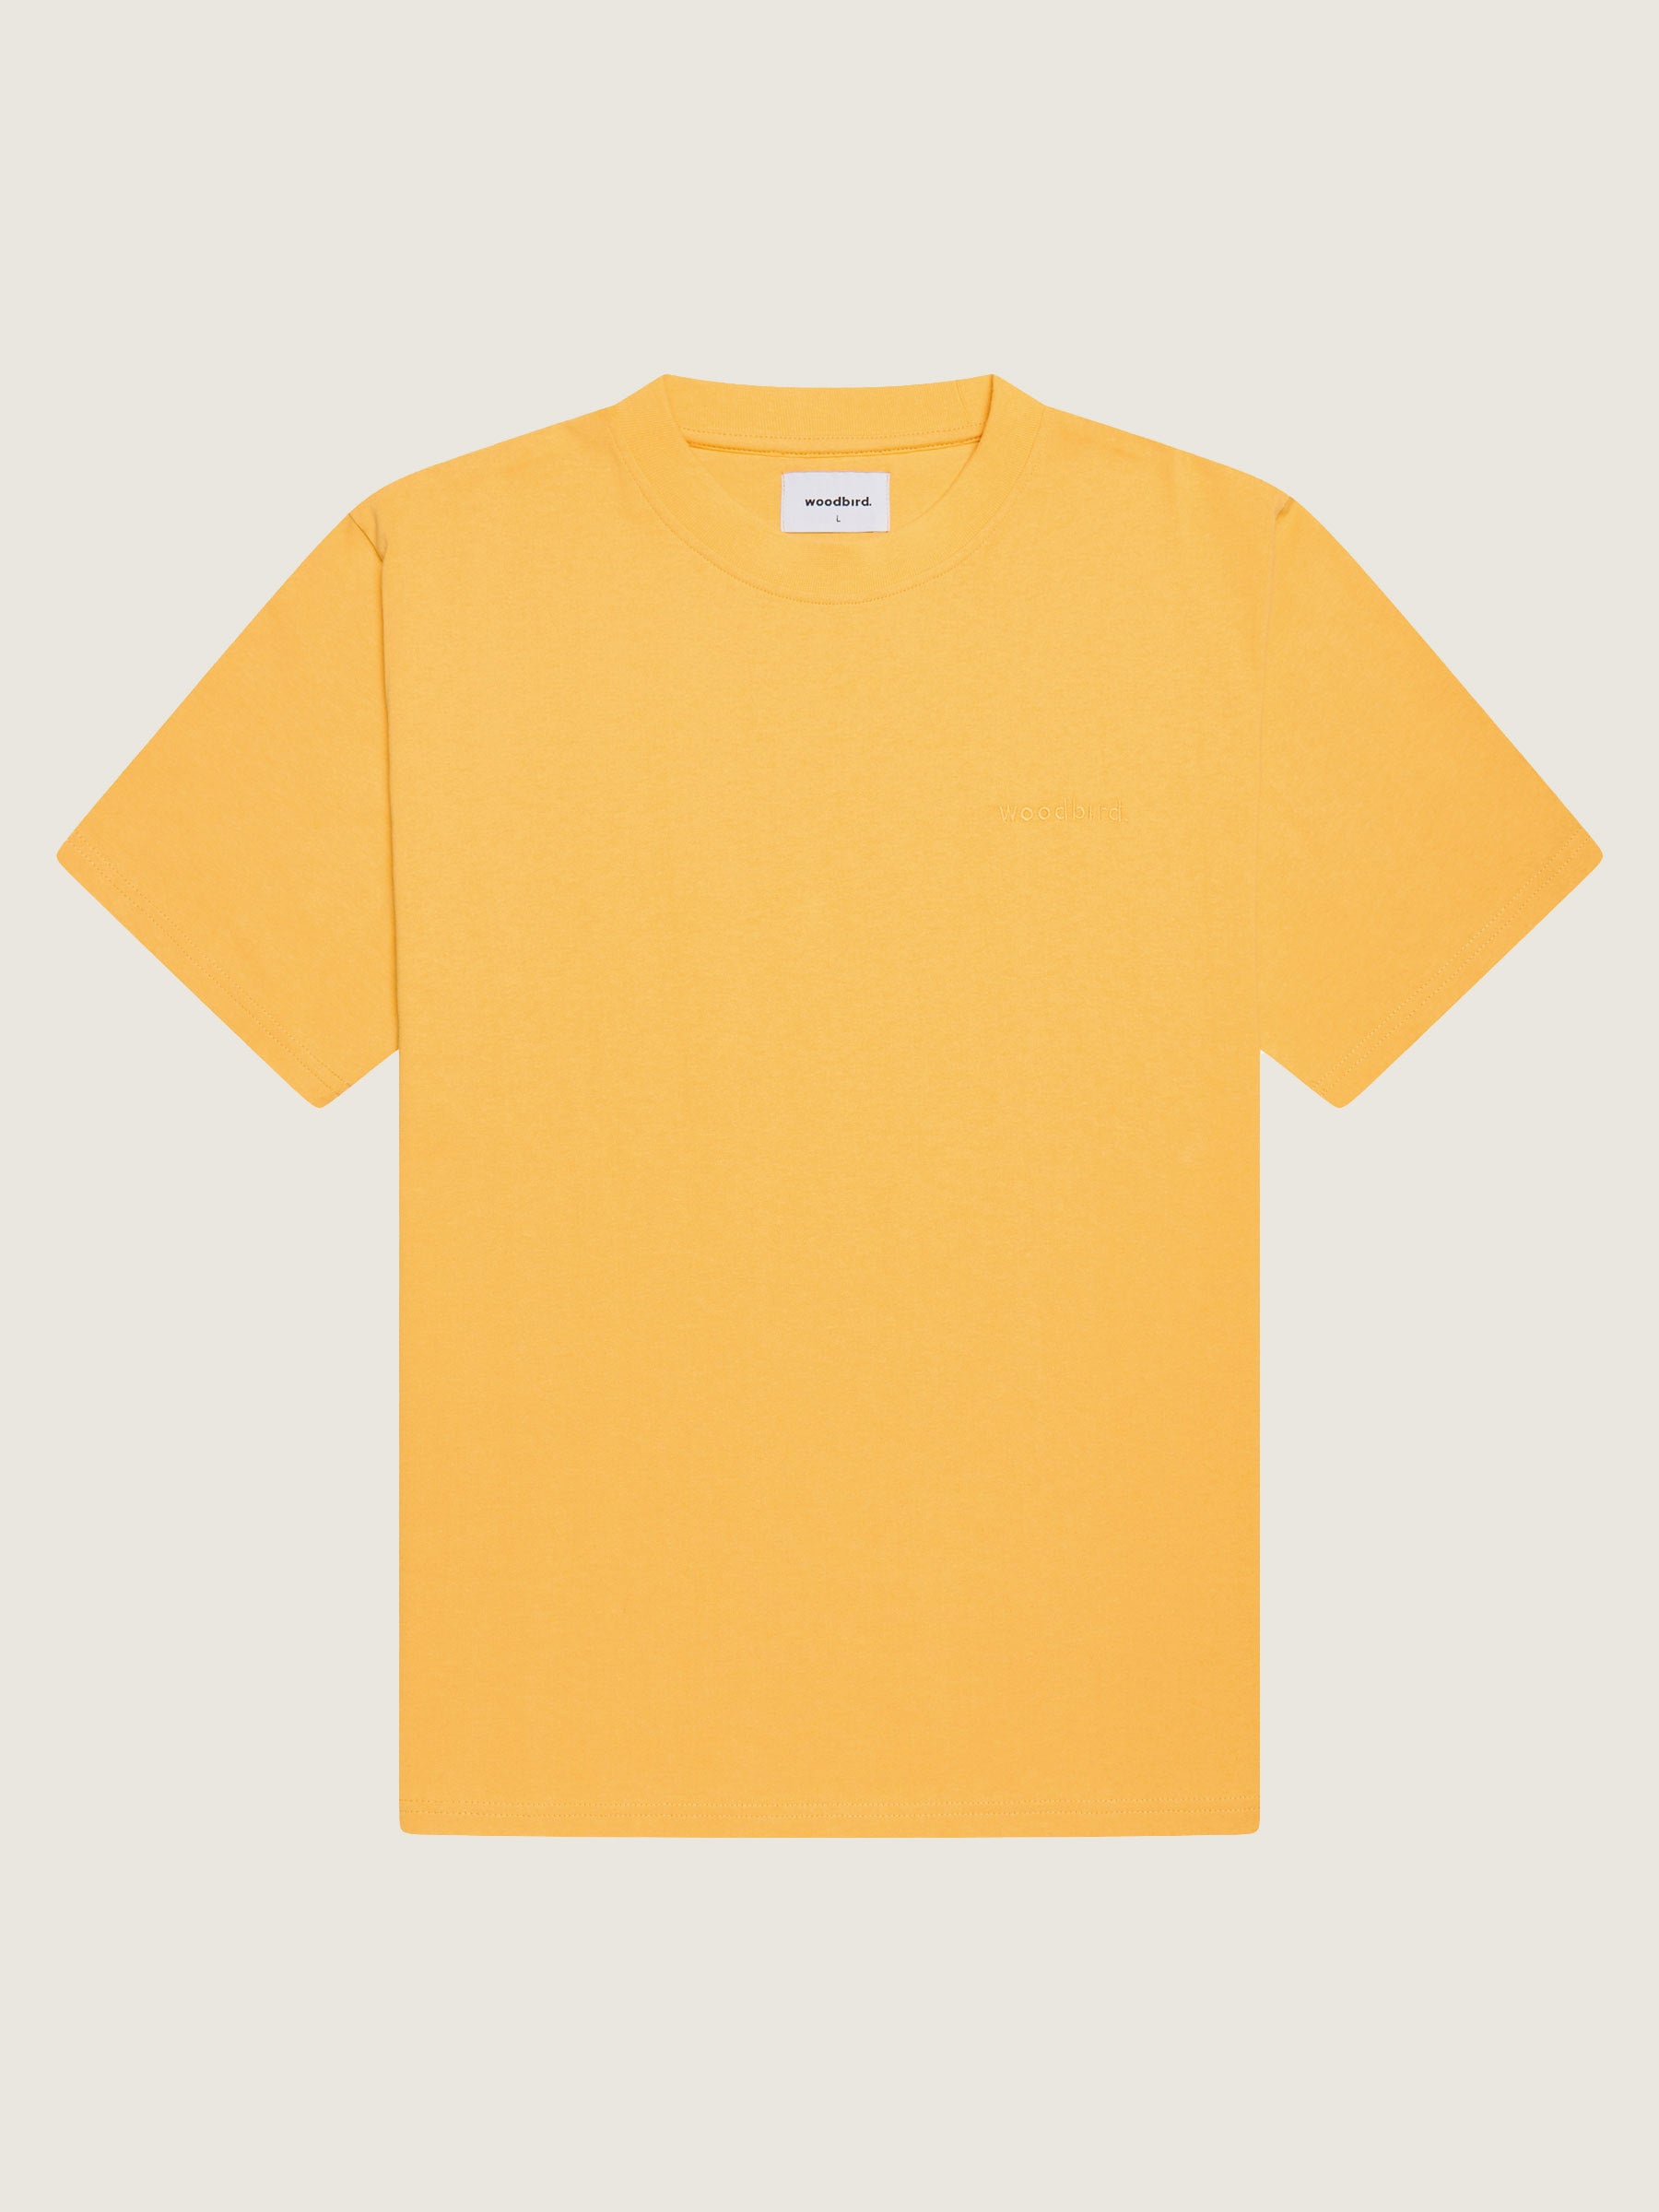 Woodbird Baine Base Tee T-Shirts Yellow